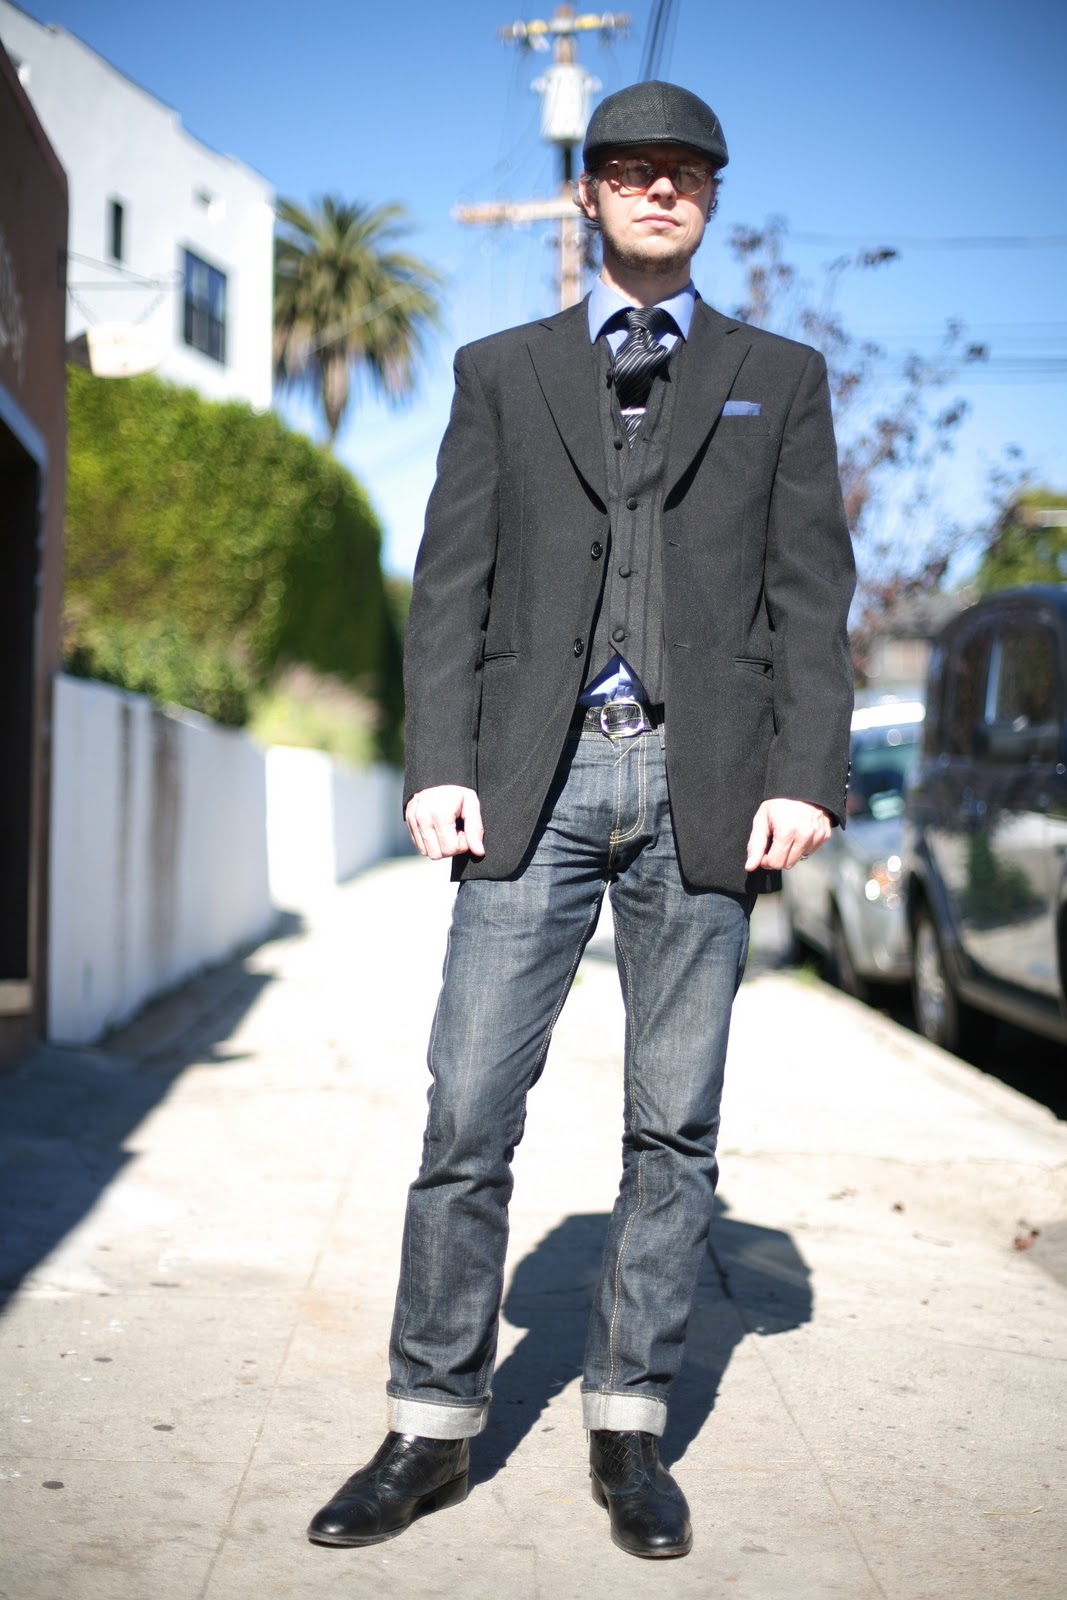 van D. photography: LA Street Fashion- Men December 2011